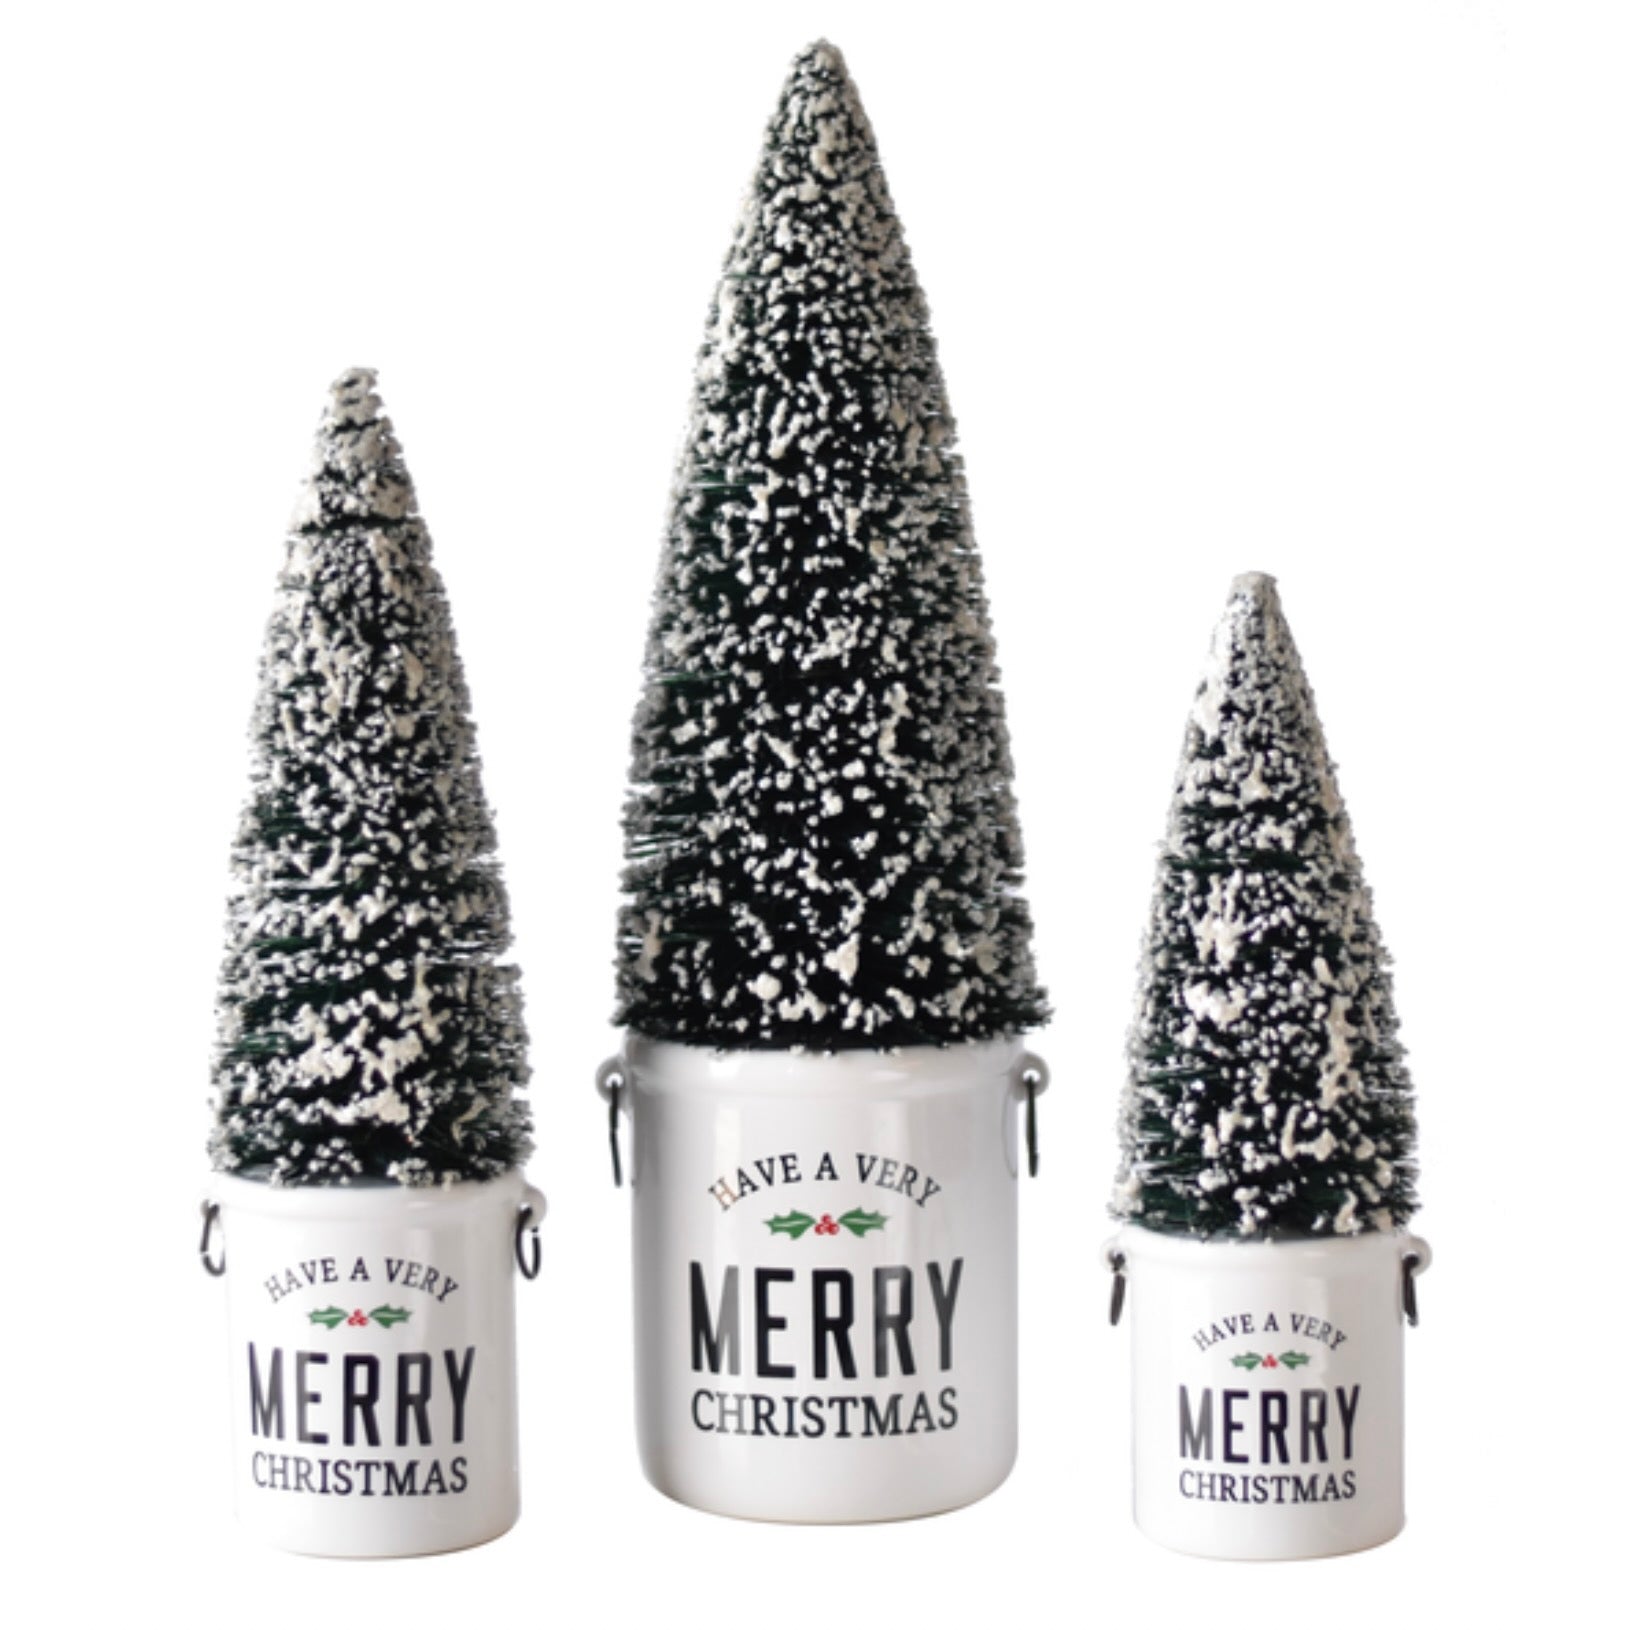 "Merry Christmas" Brush Trees - Set of 3